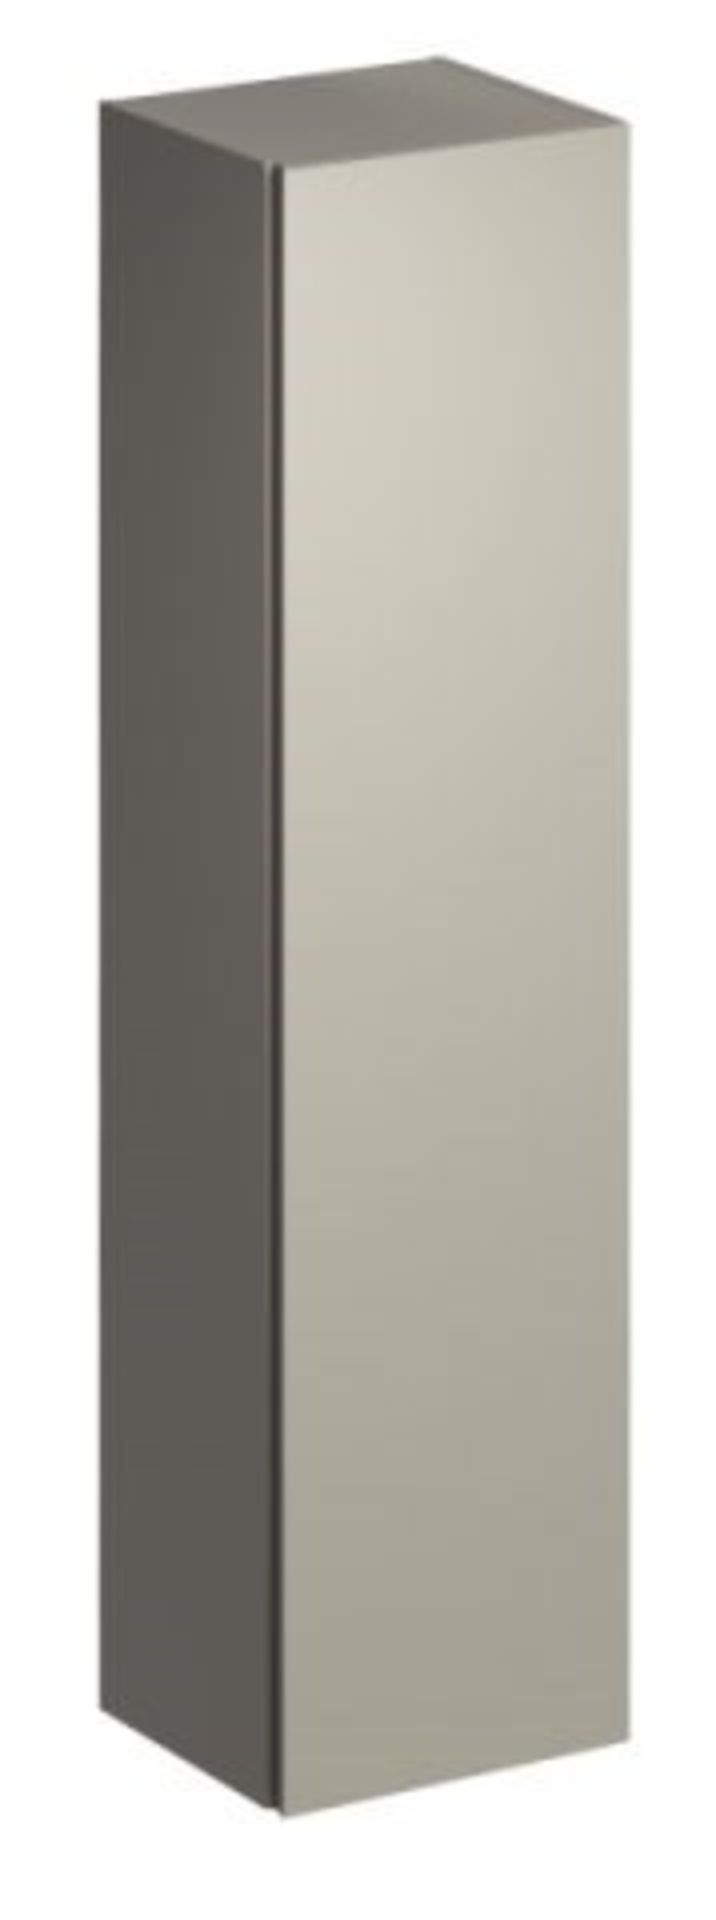 (PC38) Keramag 1700mm Xeno High Cabinet Greige,Lack Matt. RRP £885.99. Keramag Xeno 2 tall c...(